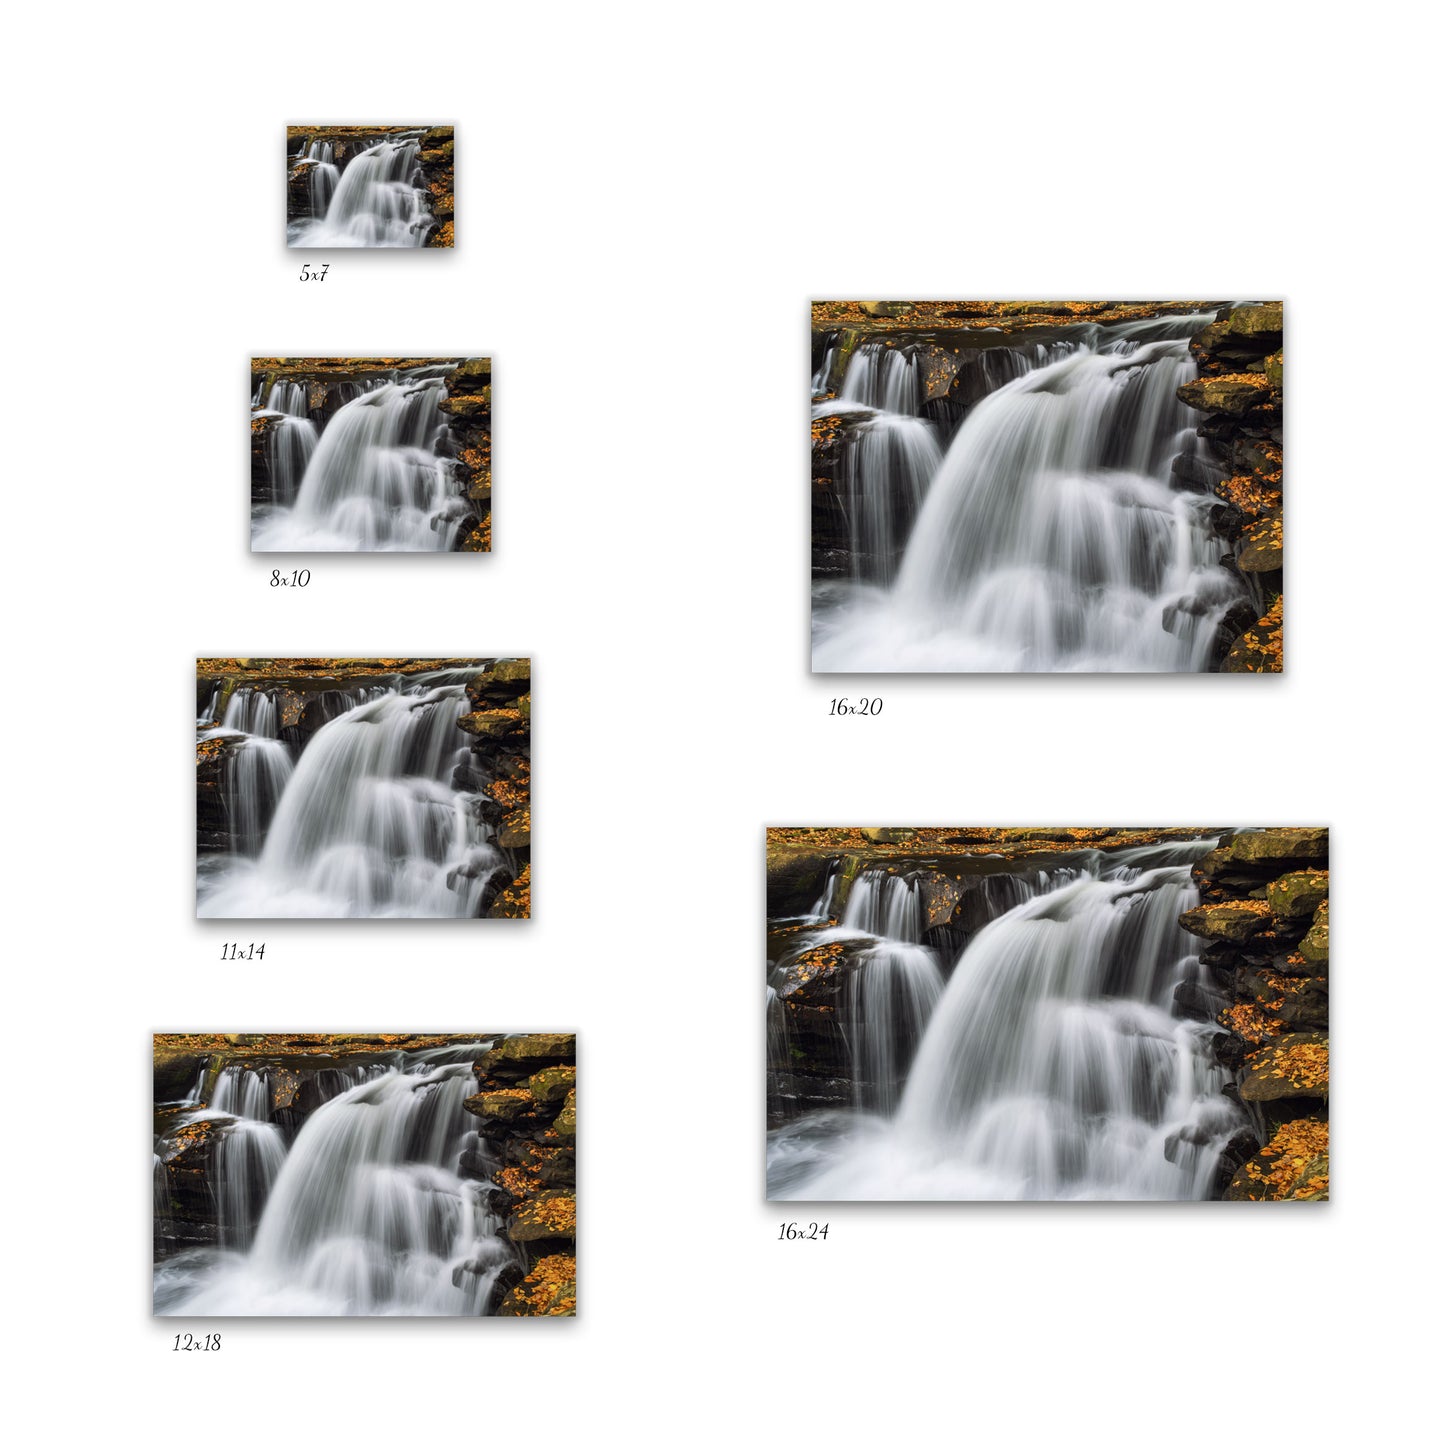 Dunloup Creek Waterfalls Print